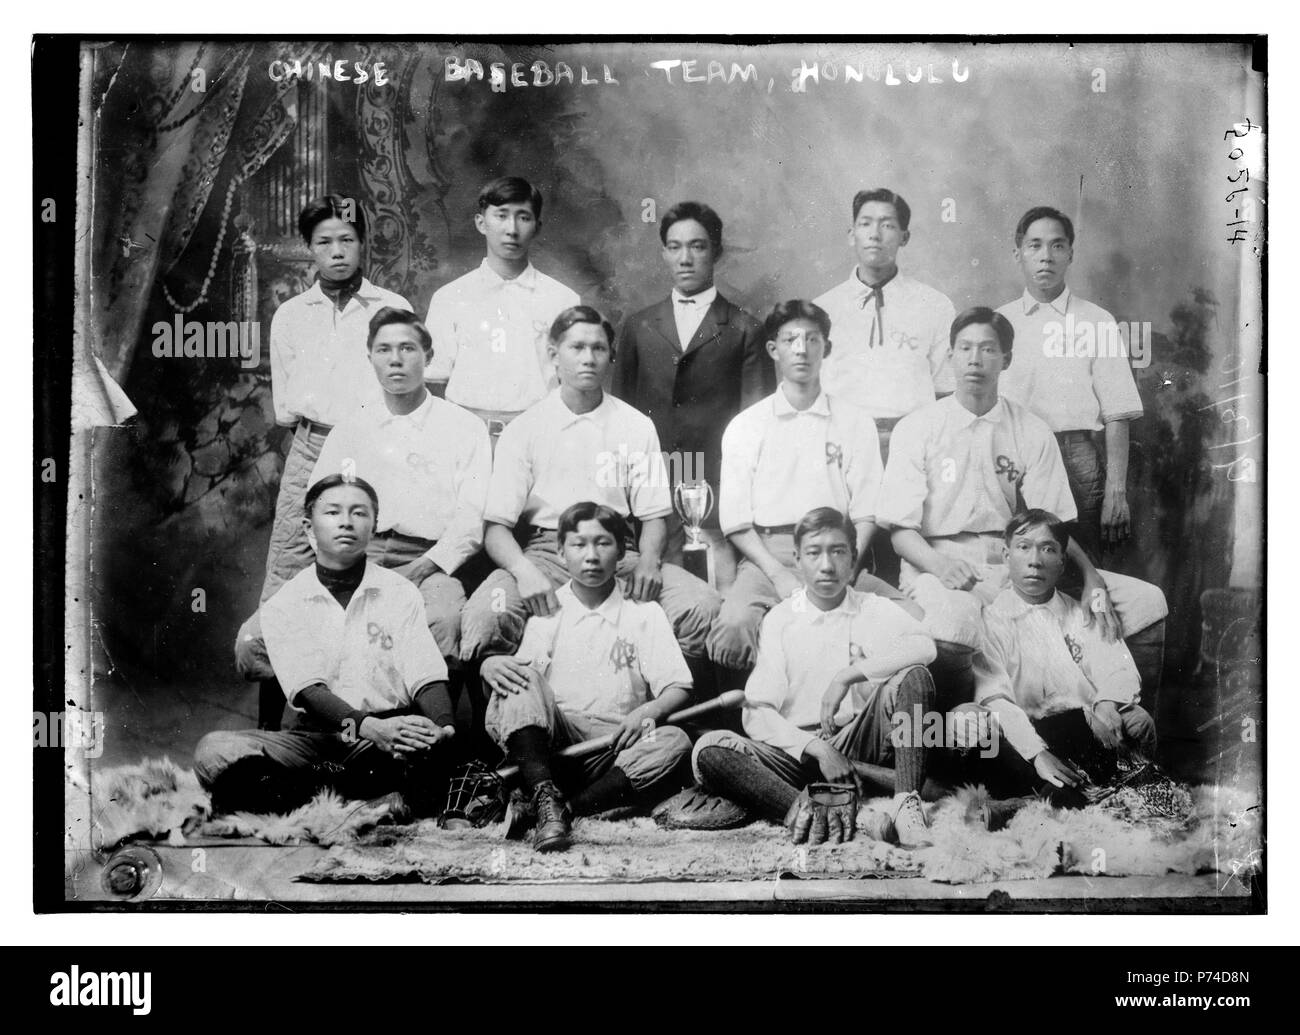 Chinese baseball team, Honolulu 1910 Stock Photo